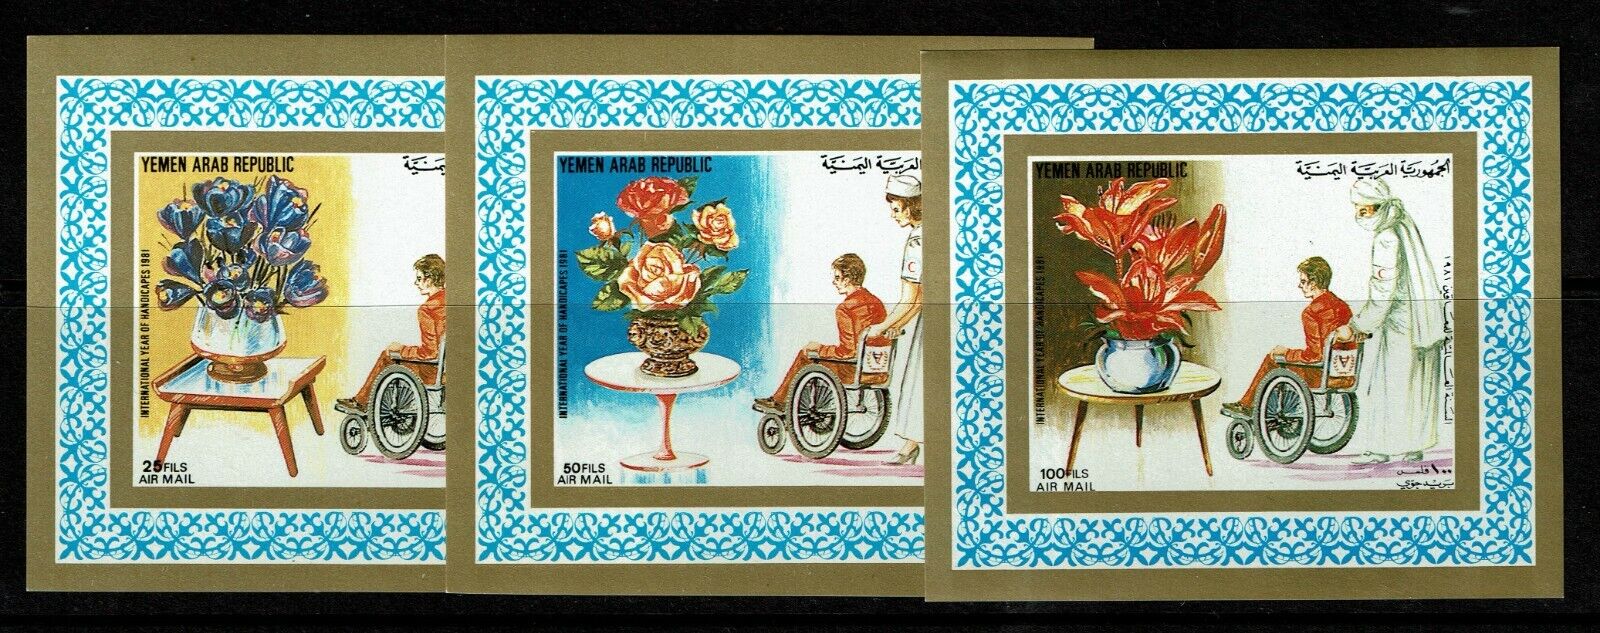 Yemen - 3 Airmail Patient & Flowers Sheets Mnh - S16029